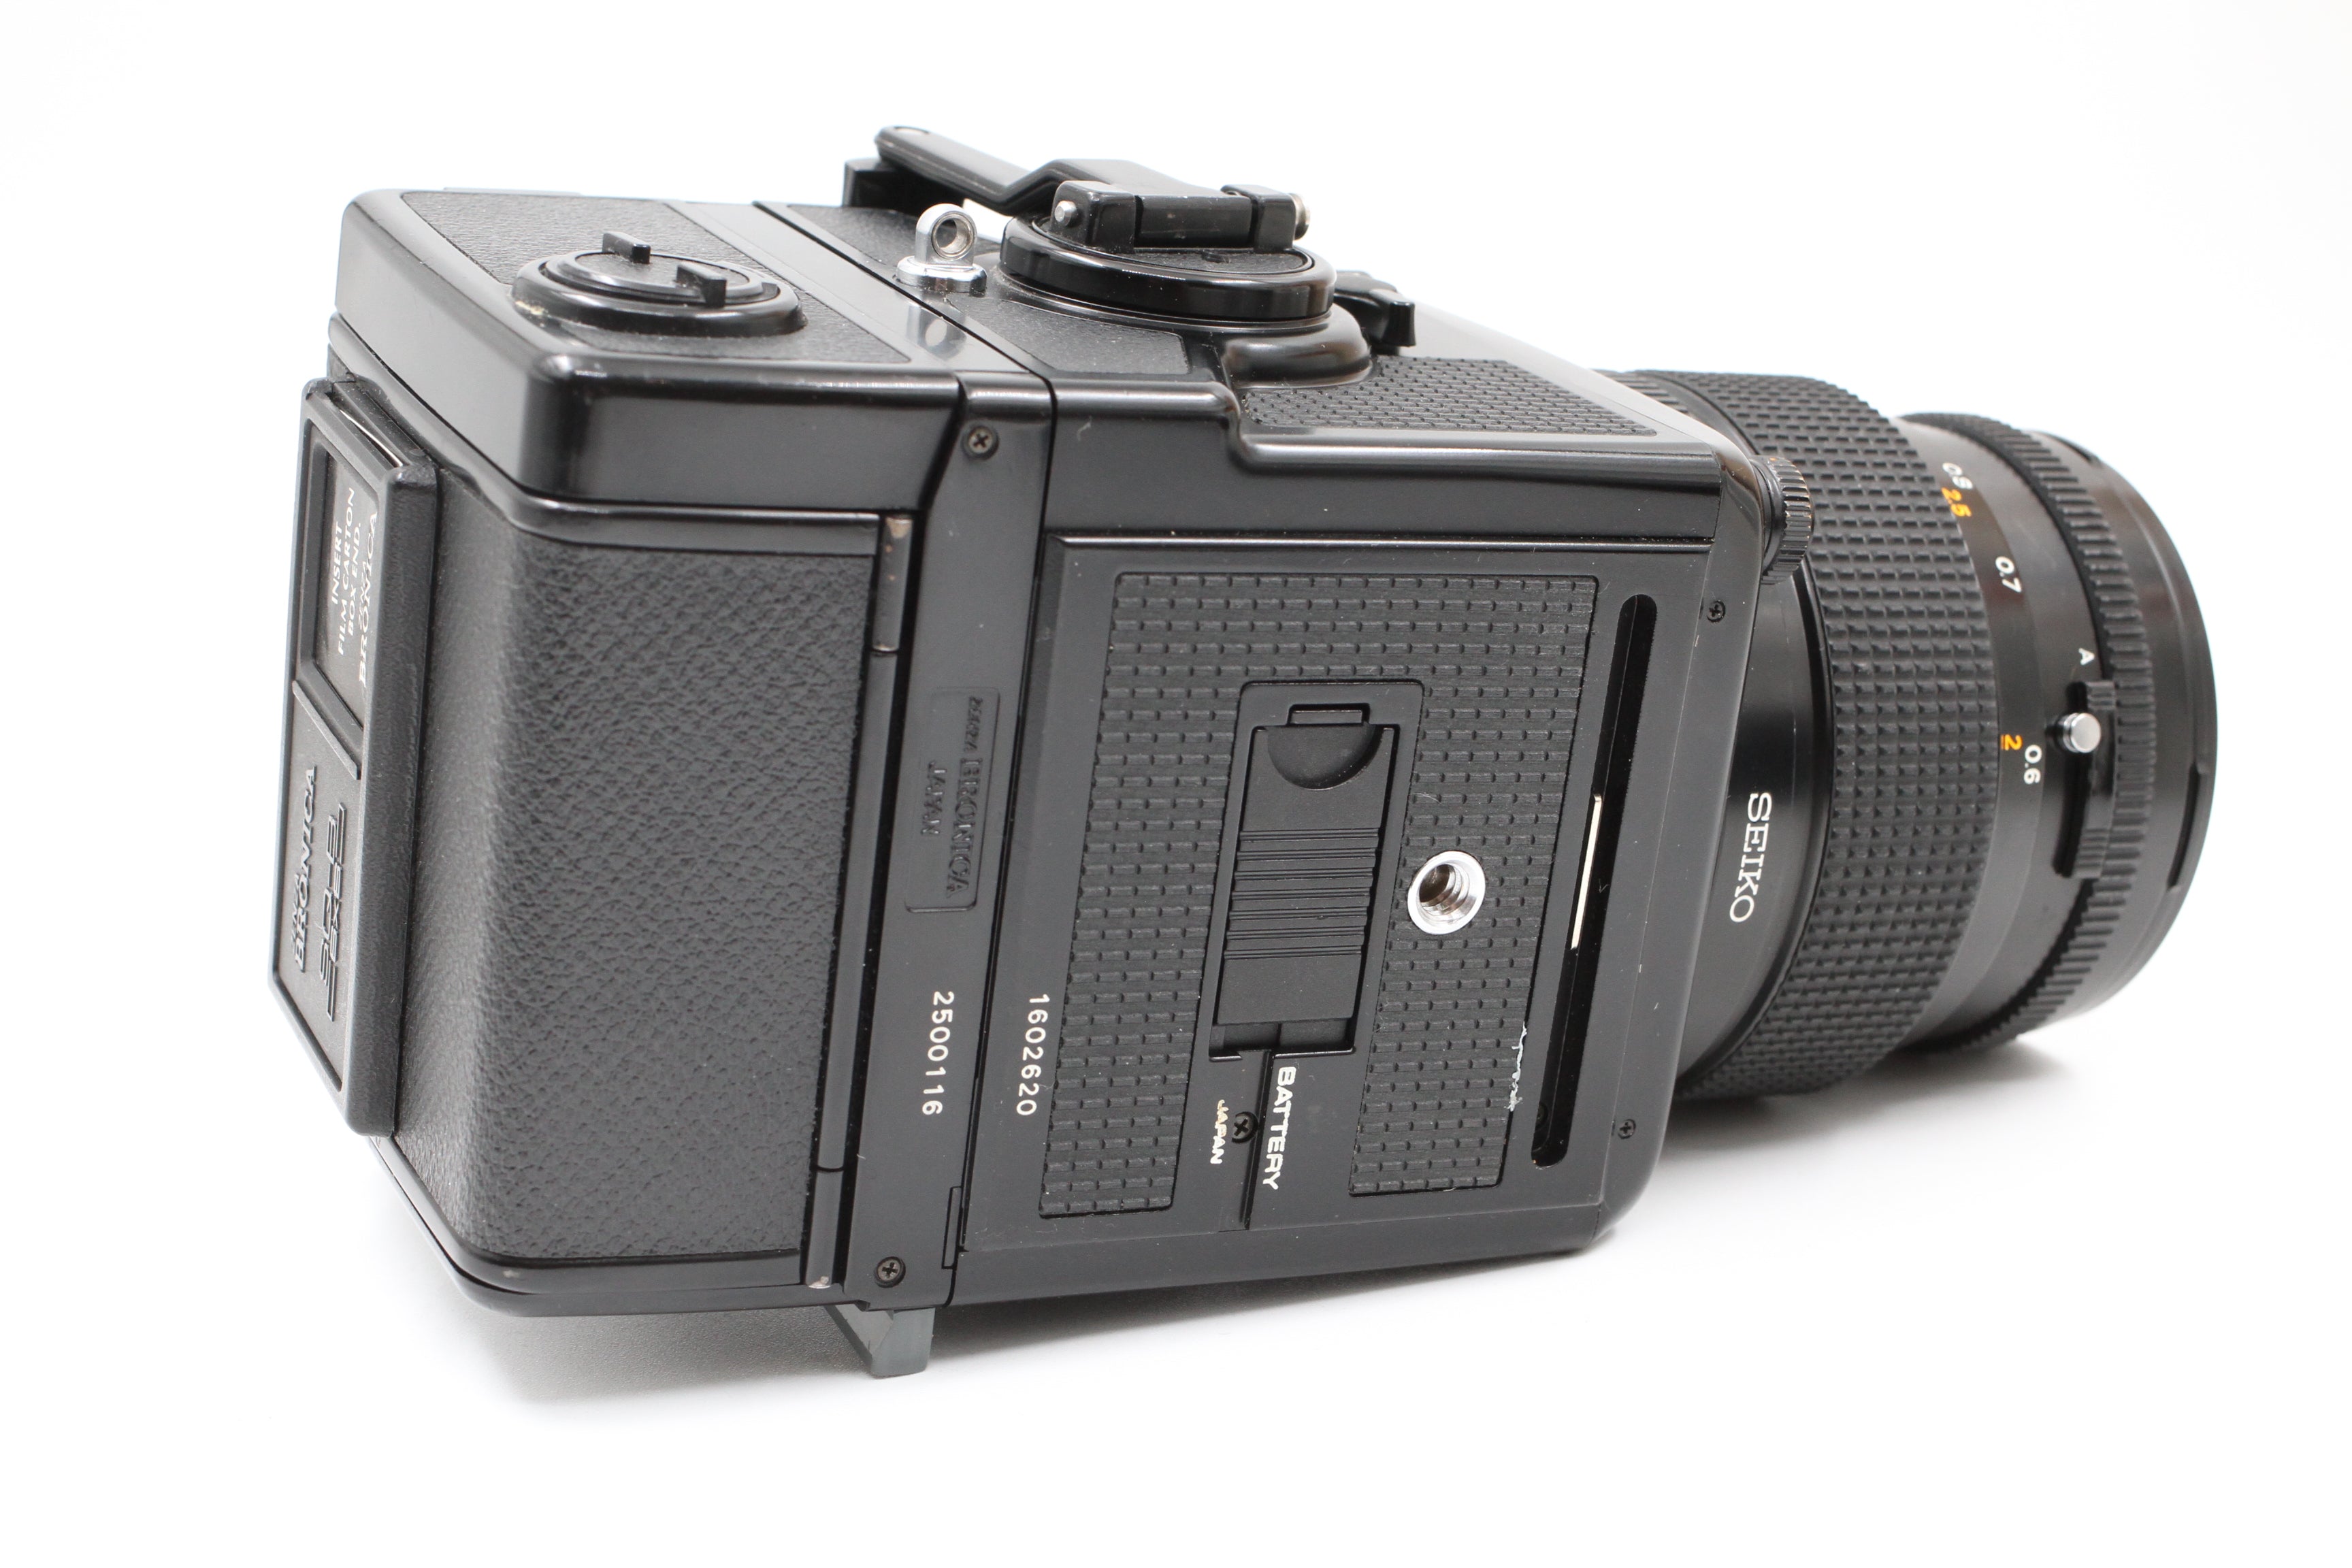 Bronica SQ-B 6x6 120 Camera w/ 65mm f4 PS Lens